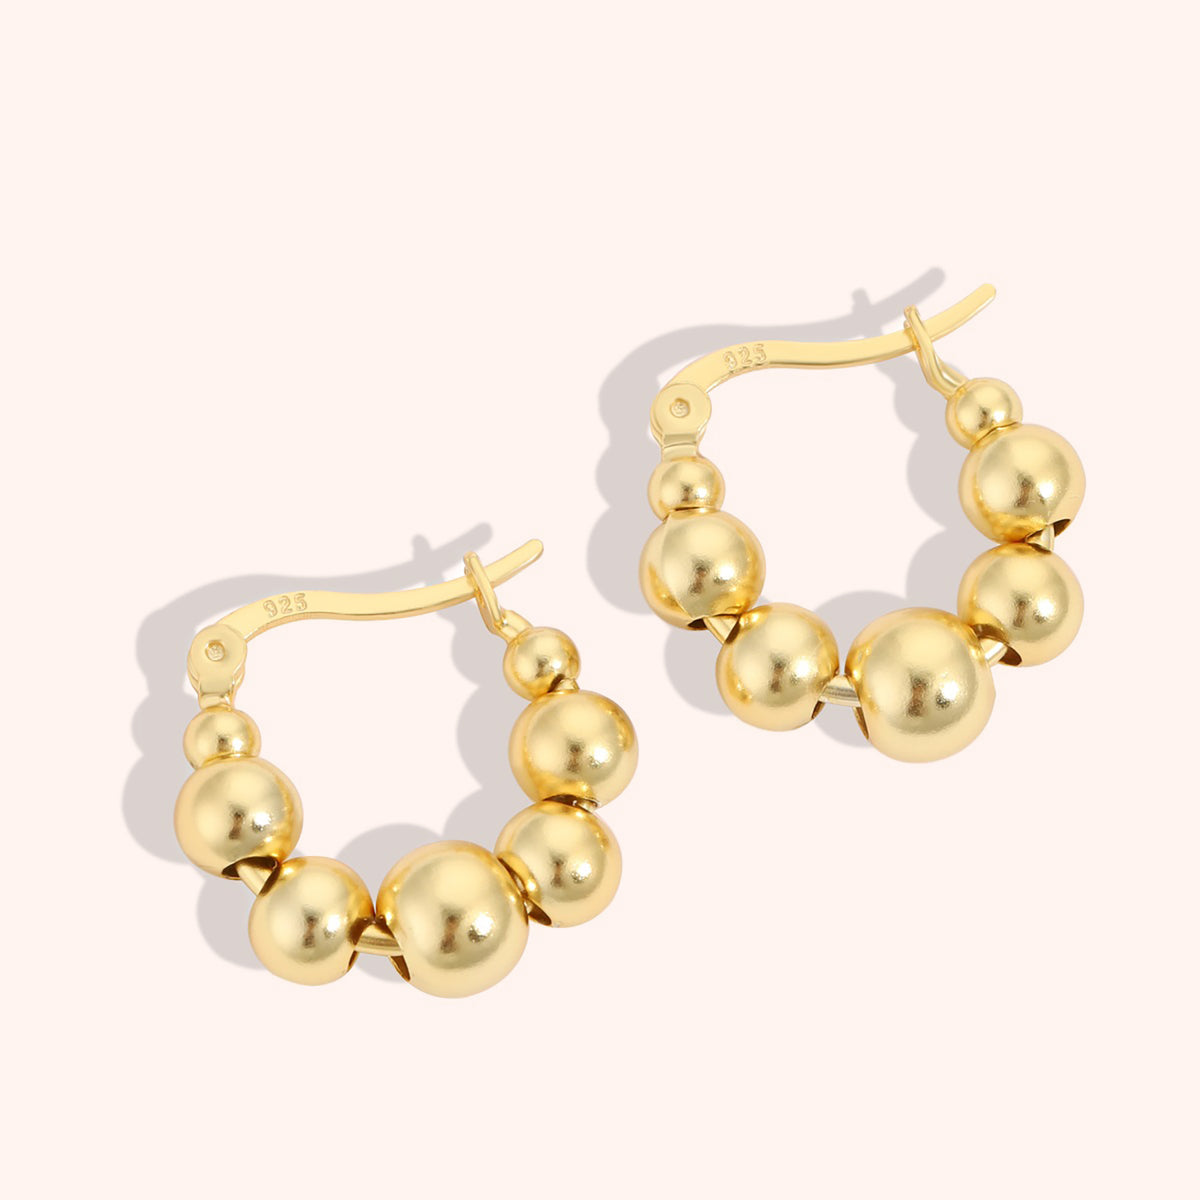 Yellow Gold Classic Hoops Earrings